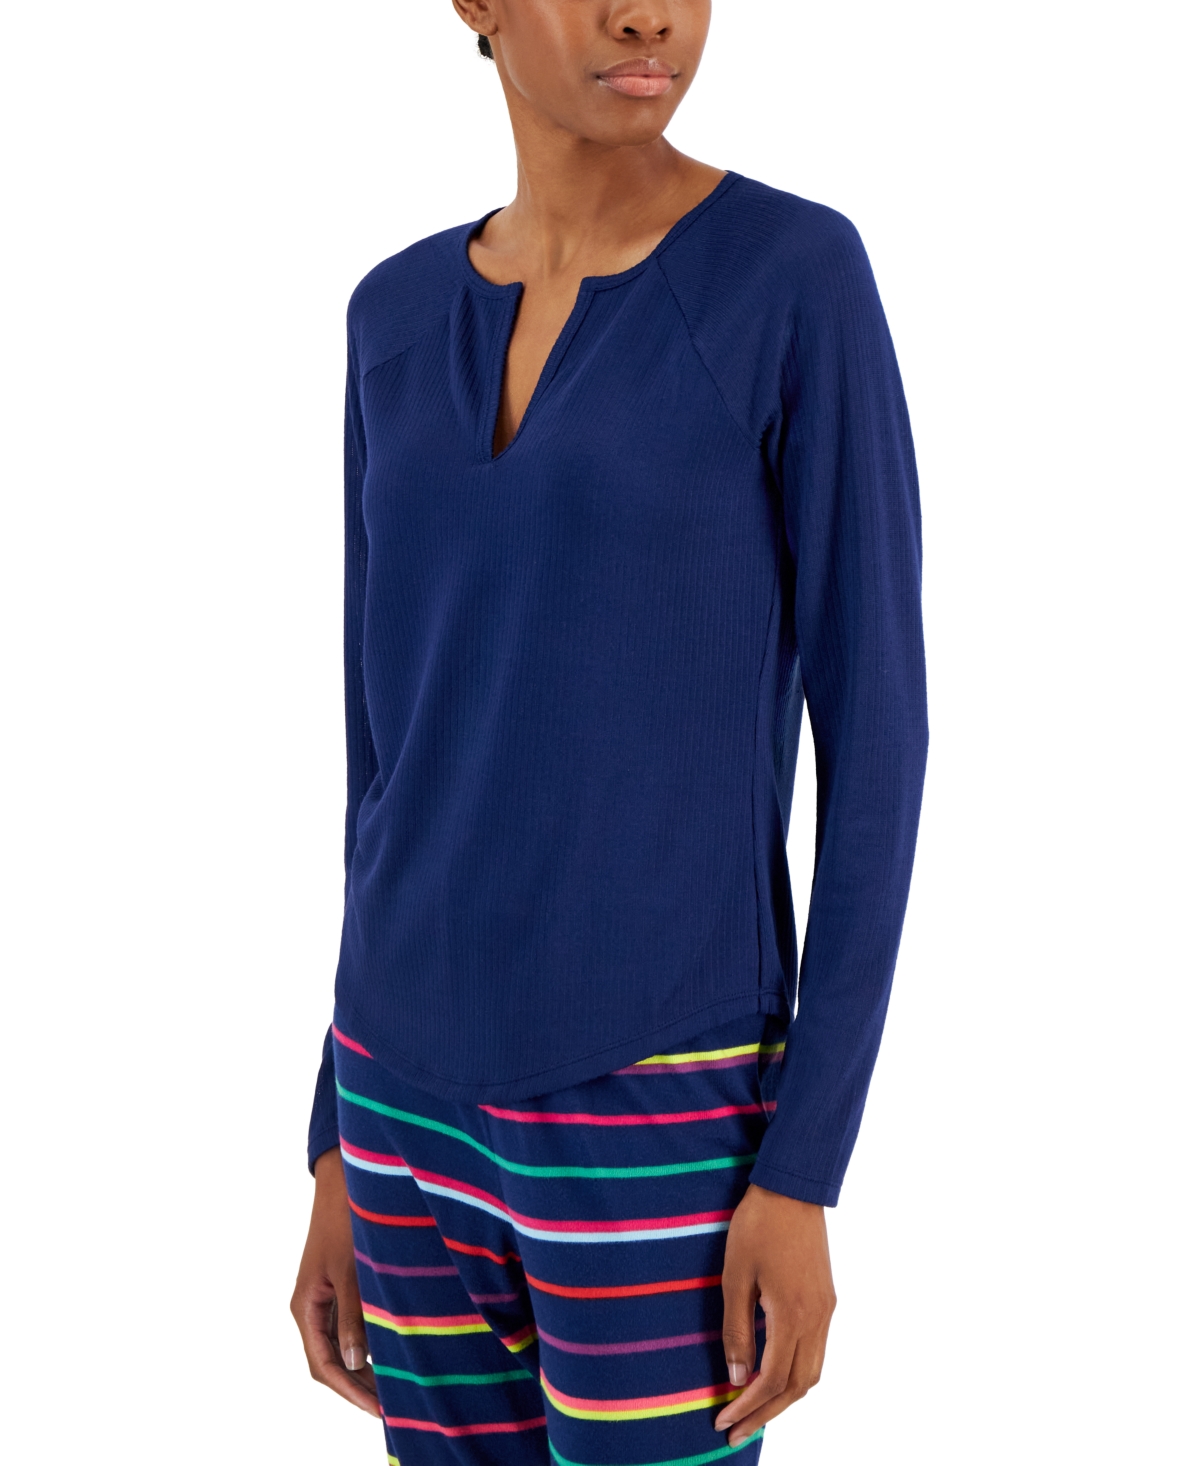 Women's Split-Neck Pajama Top, Created for Macy's - Deepest Sapphire